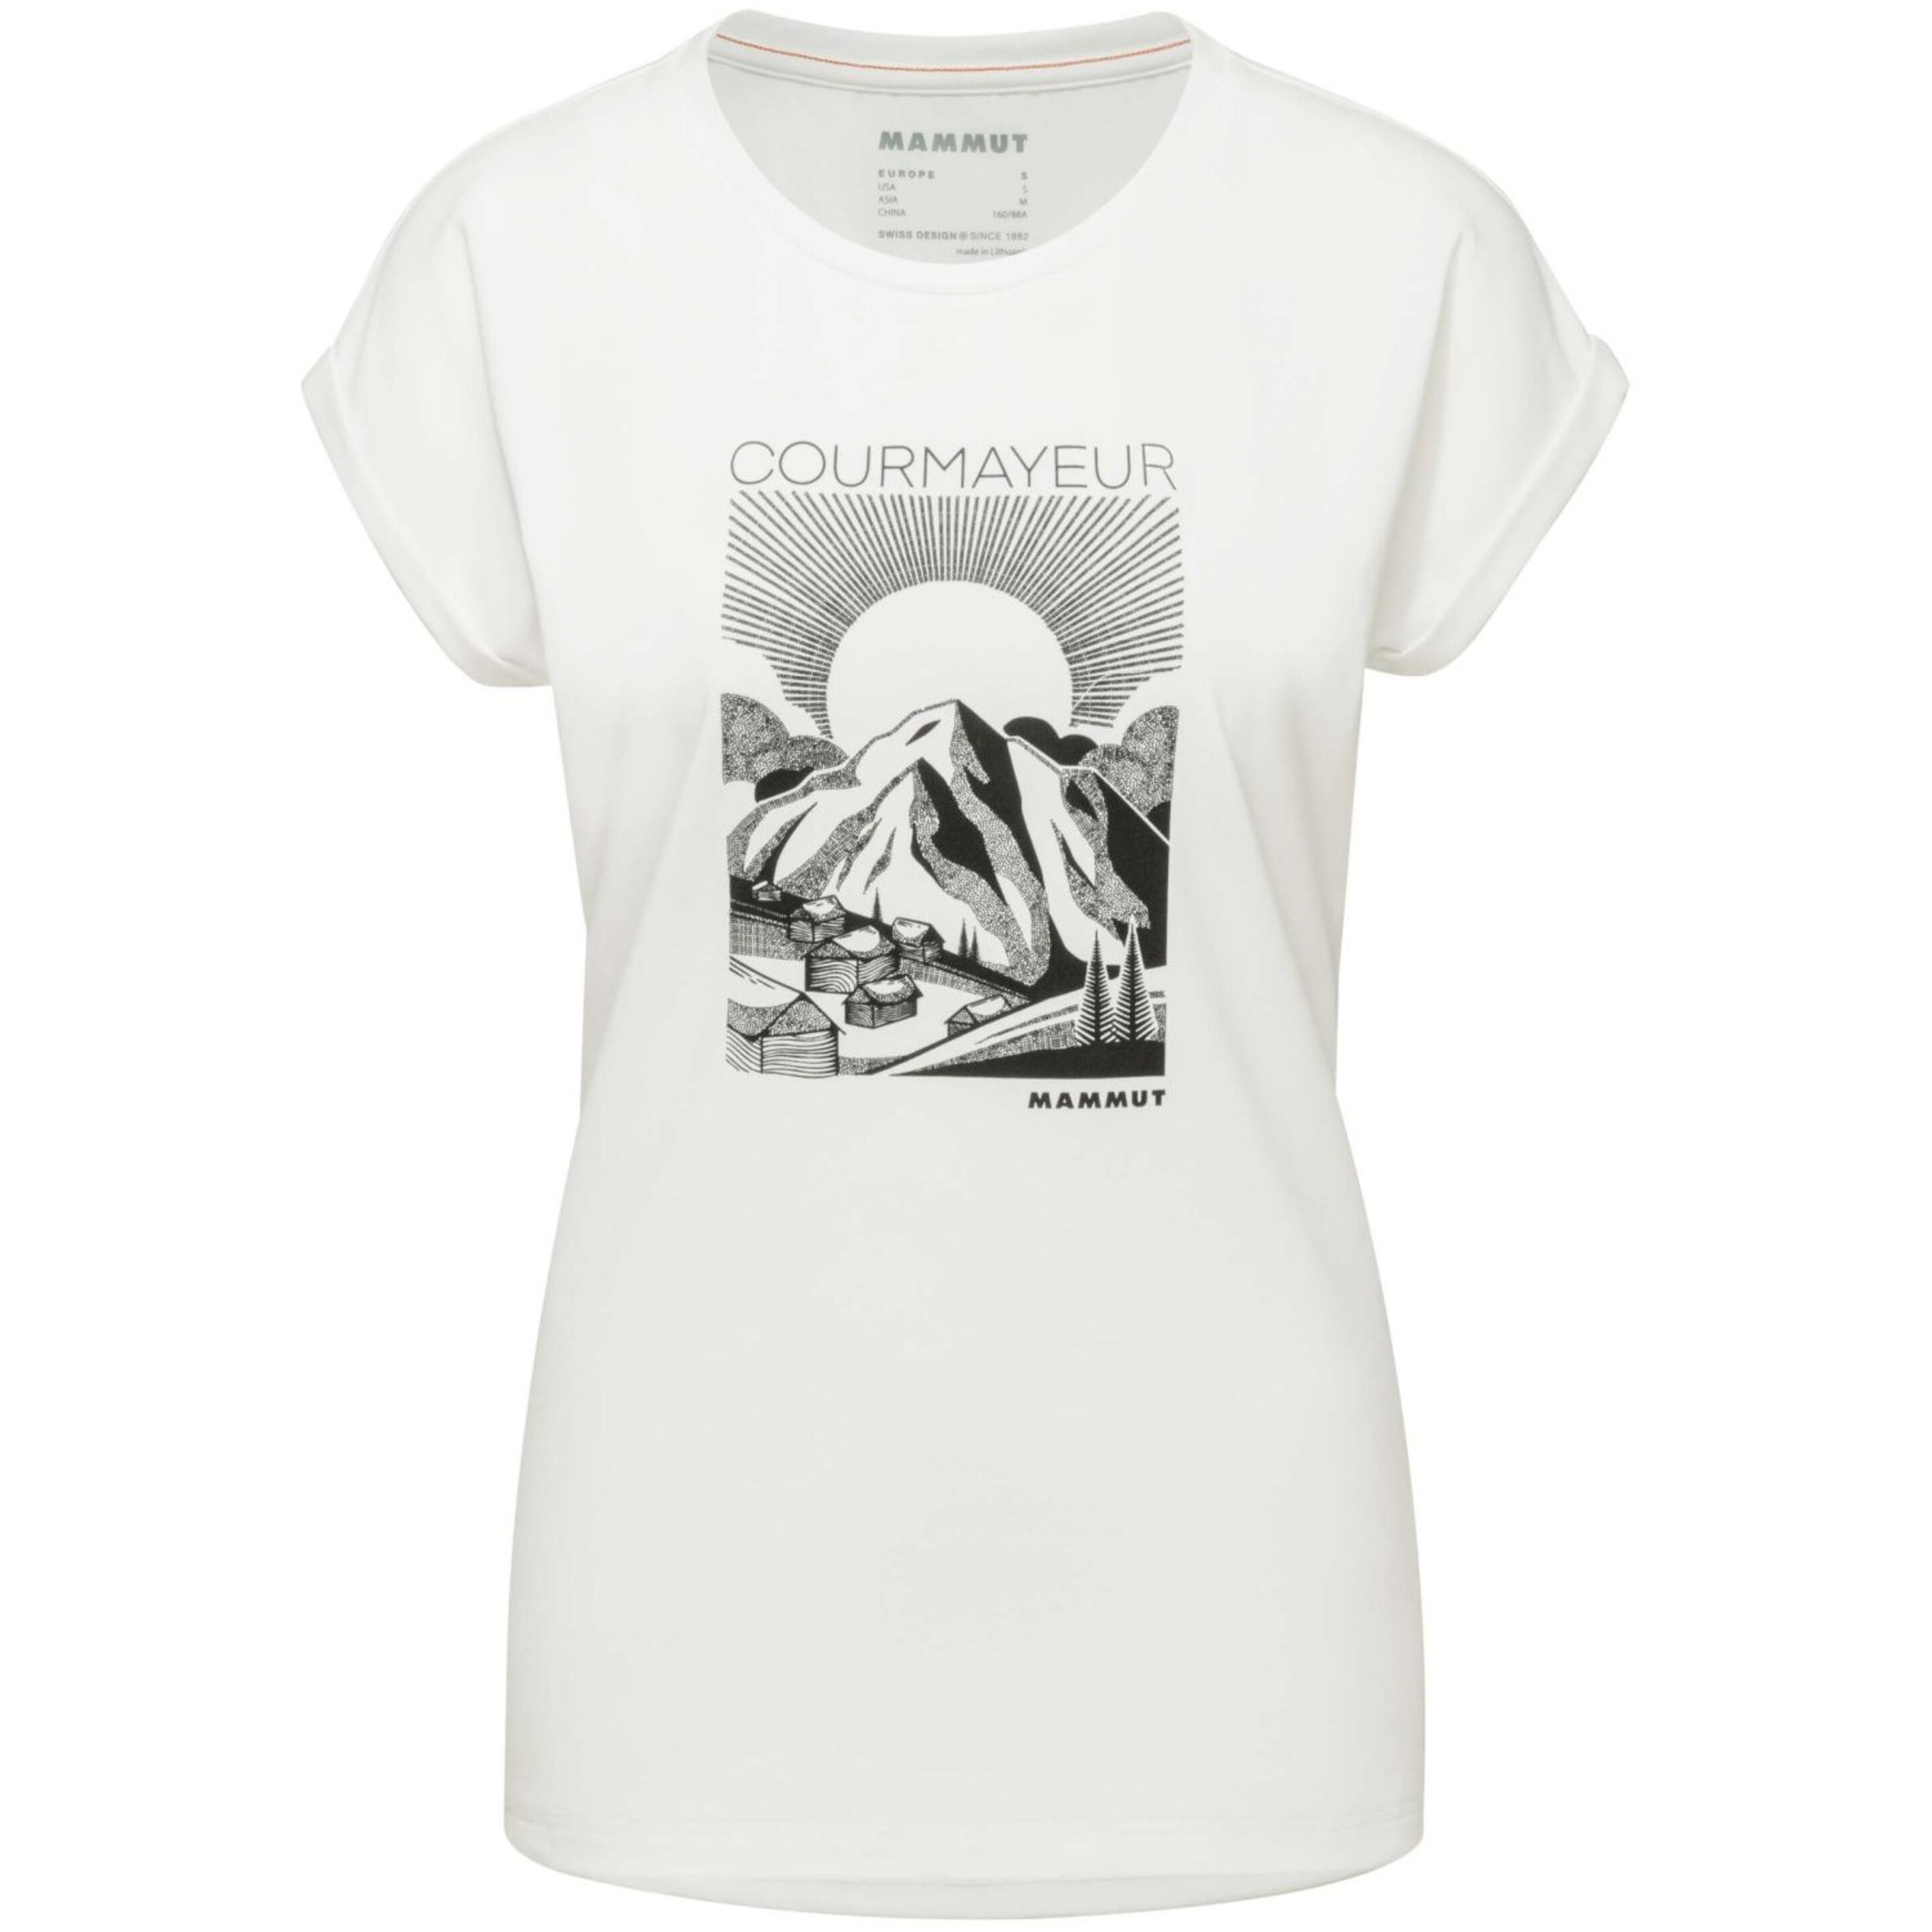 Camiseta Mammut Mountain Courmayeur - blanco - 